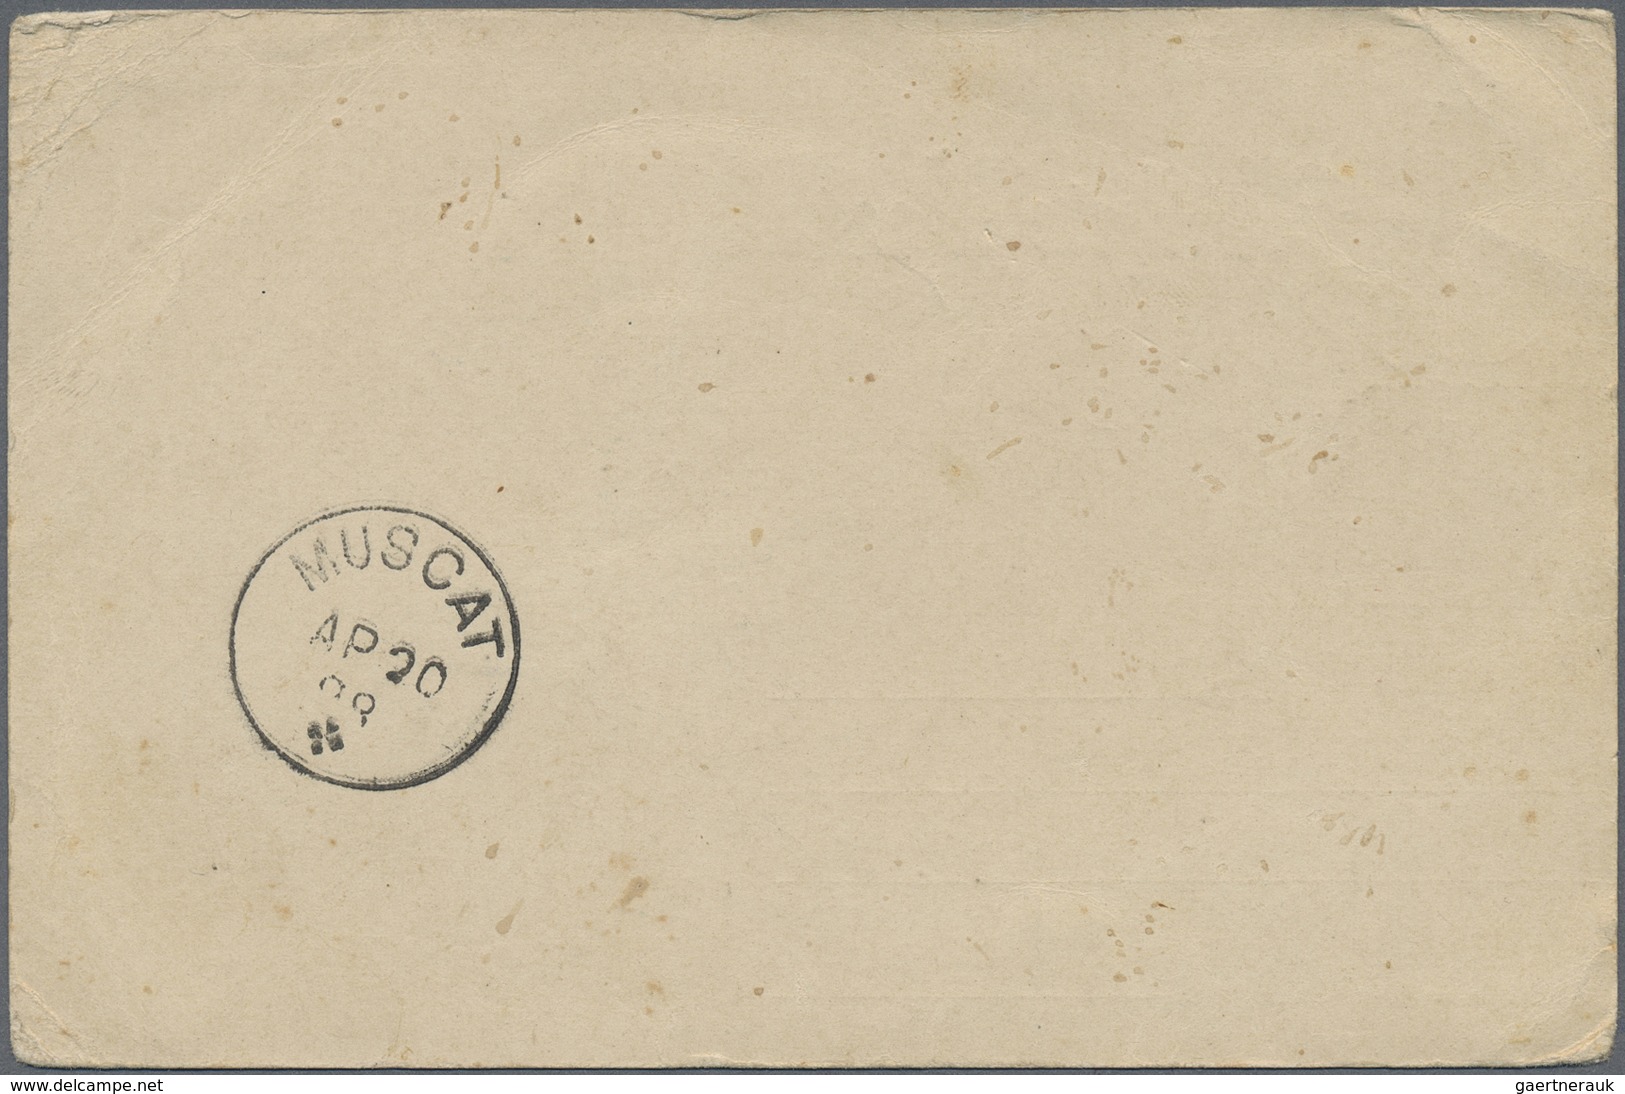 GA Oman: 1898, Postal Stationery Card Portuguese India 1/4 De Tanga Tied By Clear "SALIGAO ABR" Cds. Ad - Oman